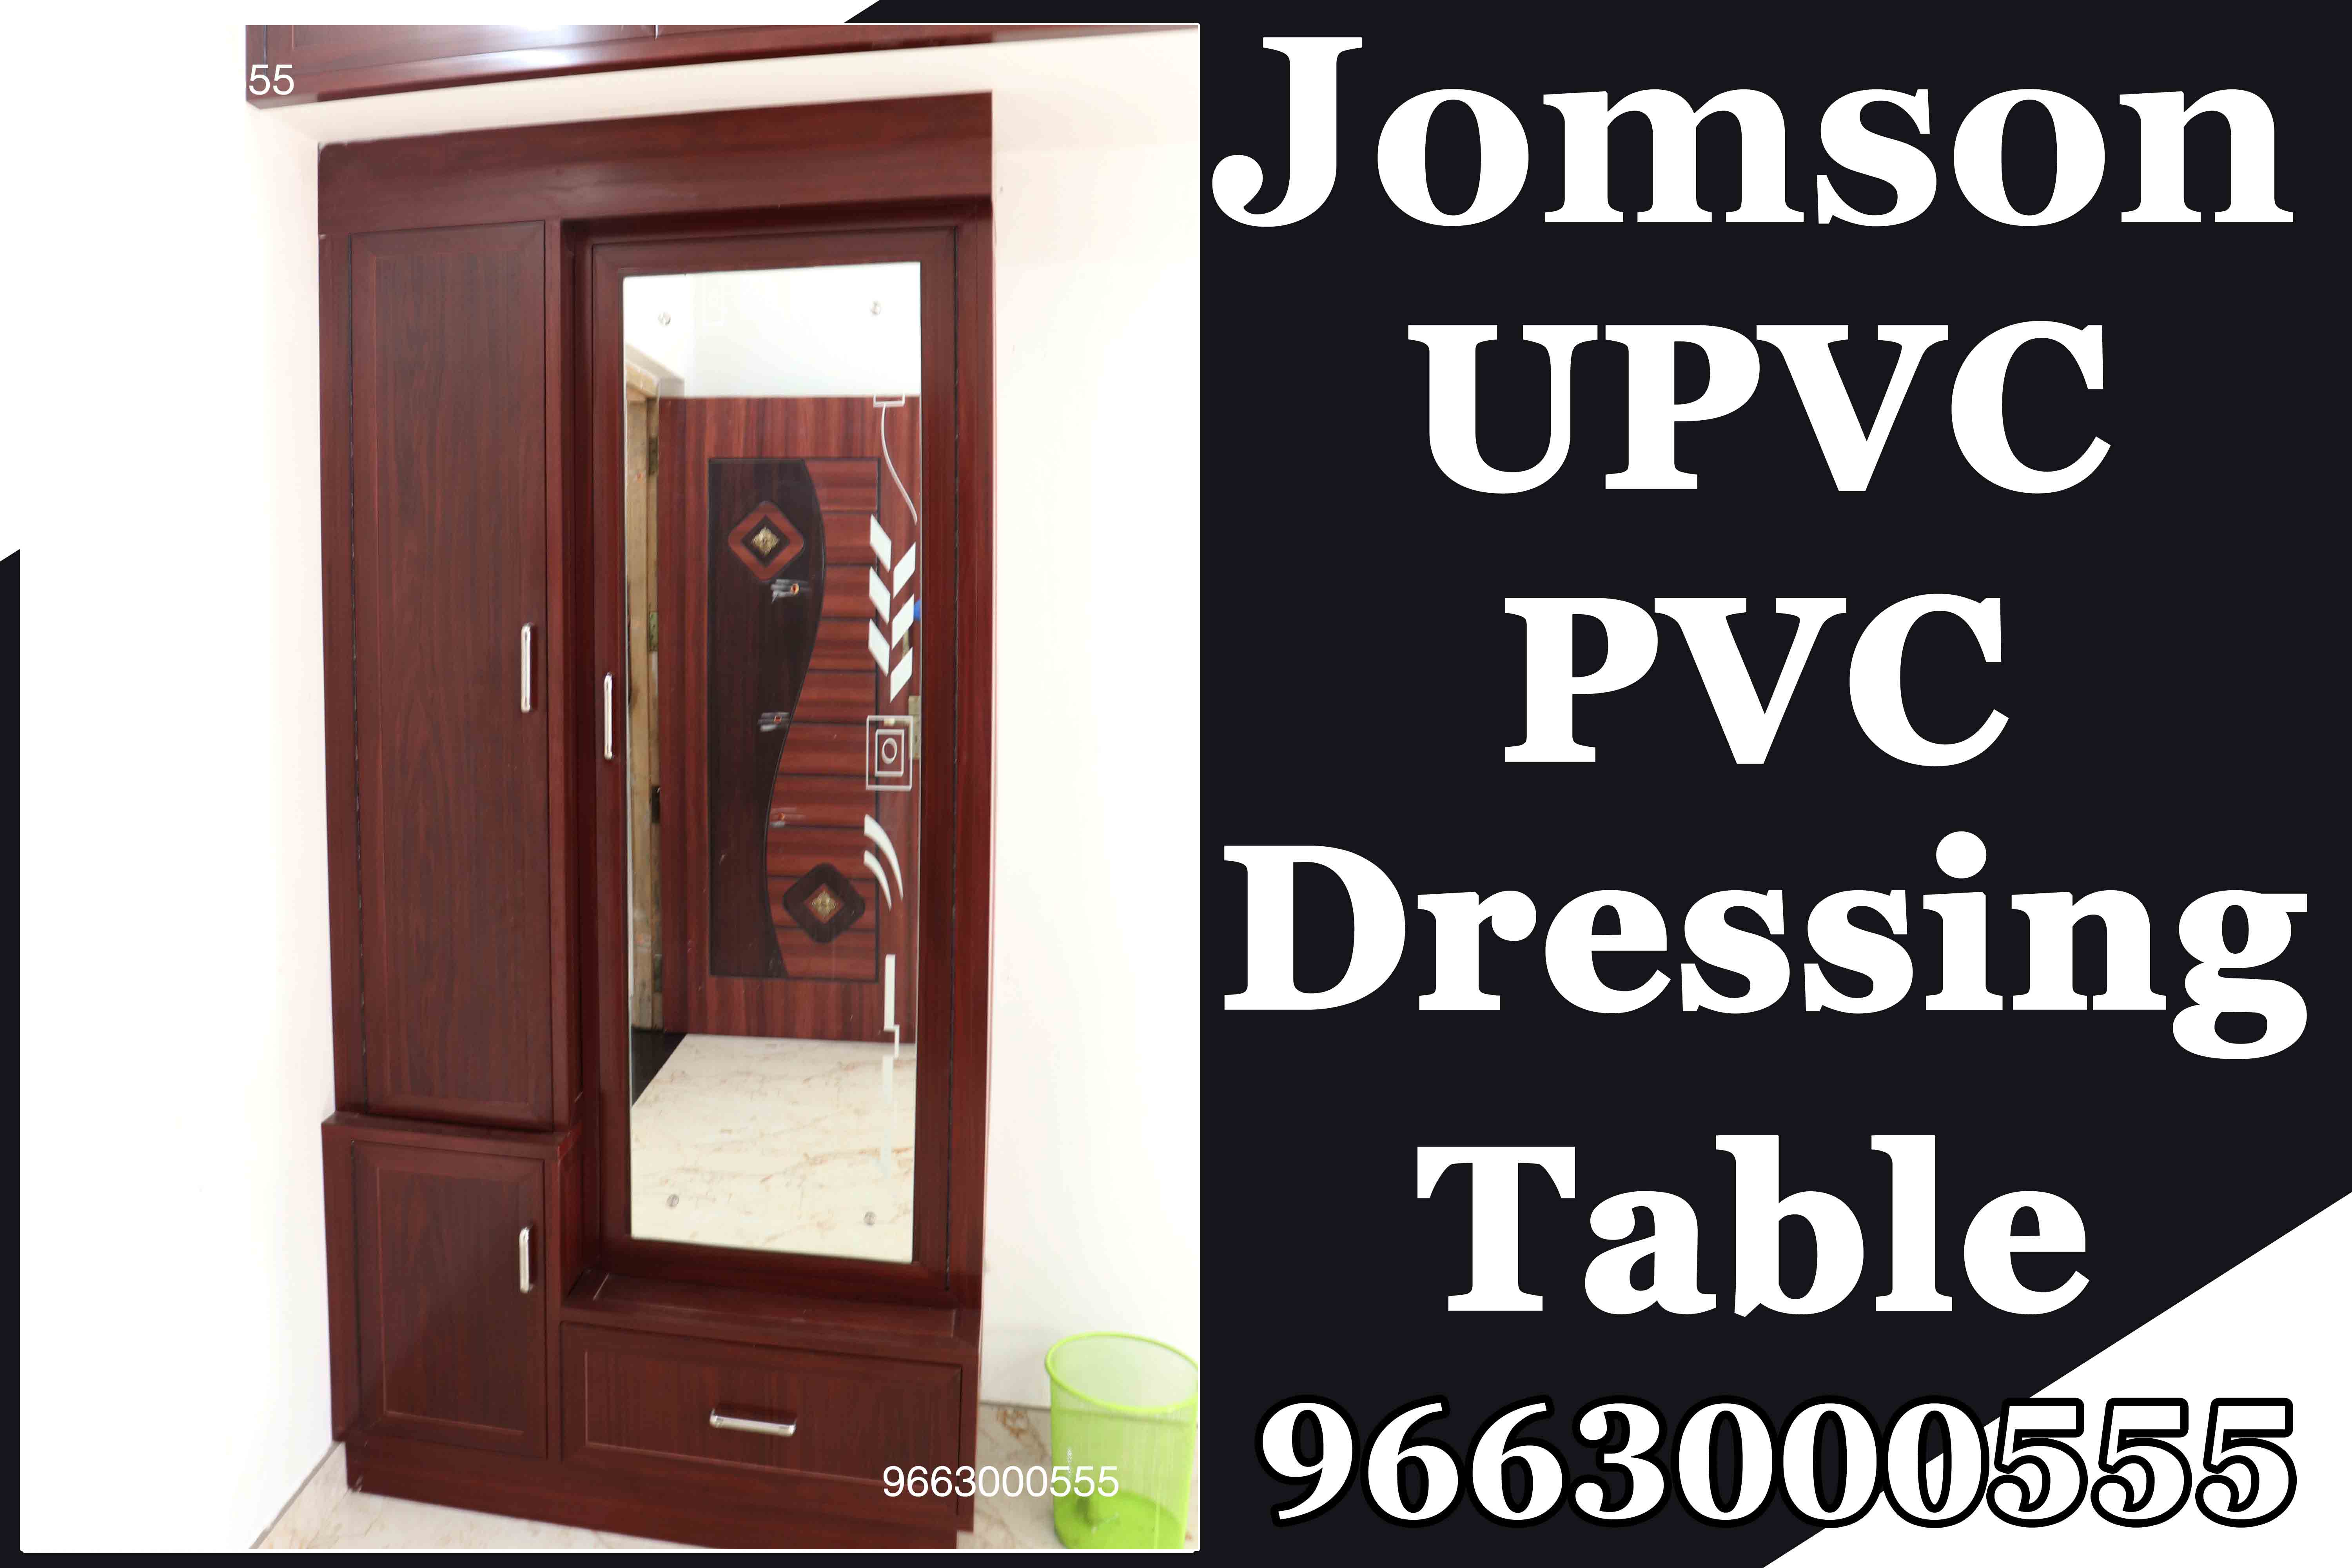 pvc dressing table starting price